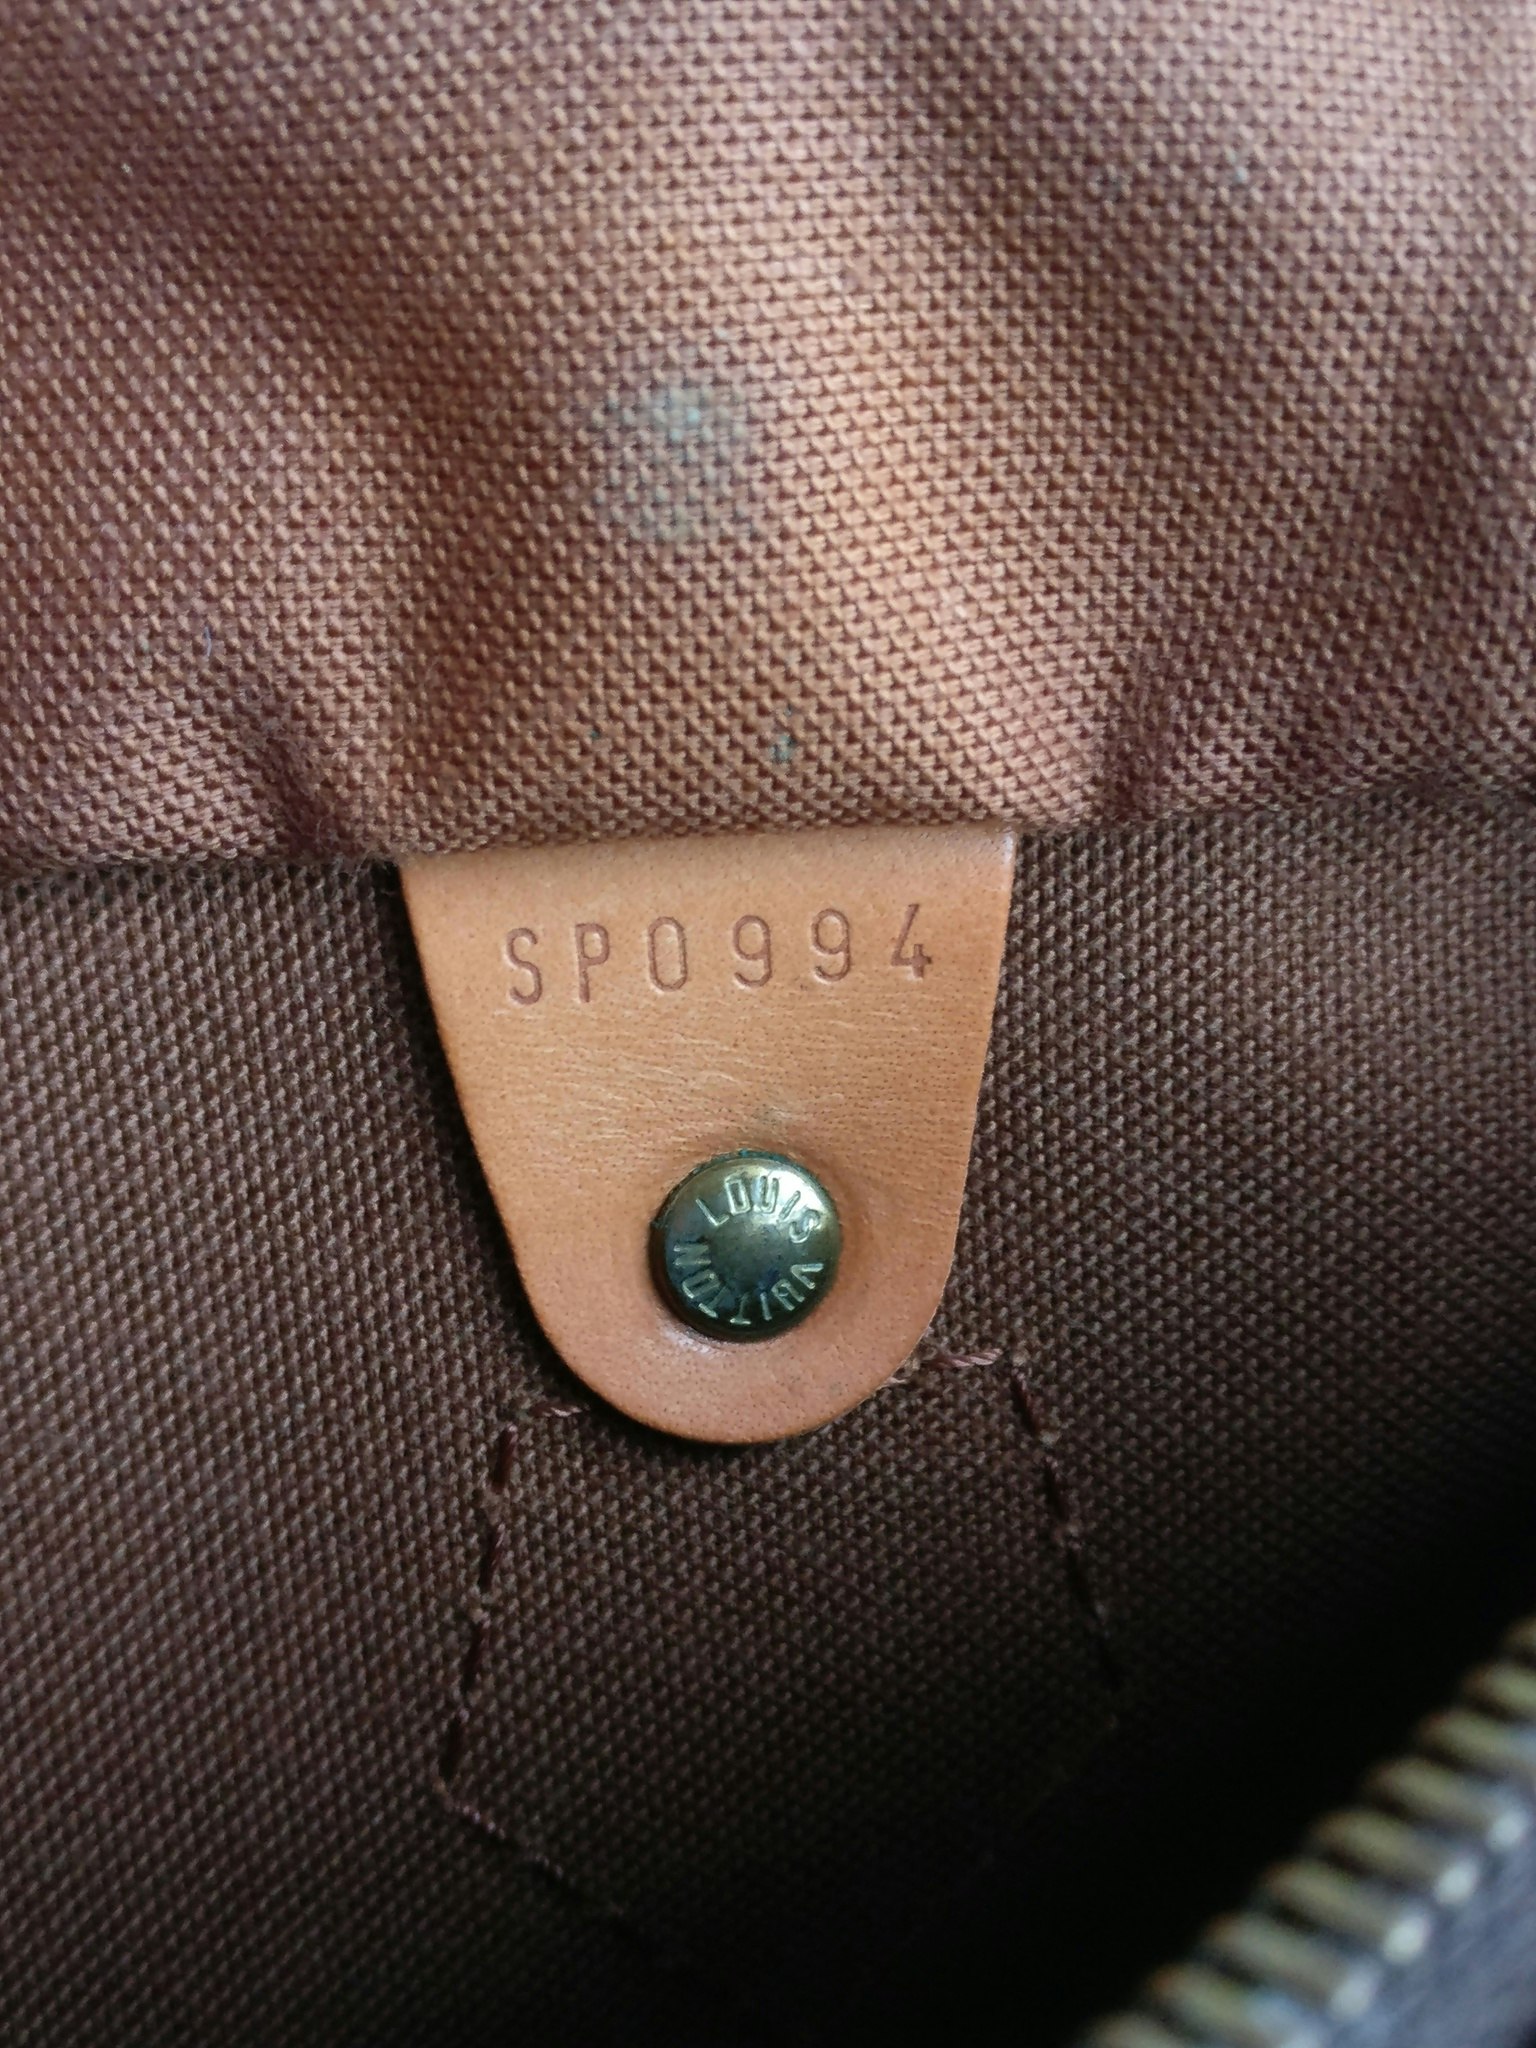 Louis Vuitton Speedy 25 - Good or Bag